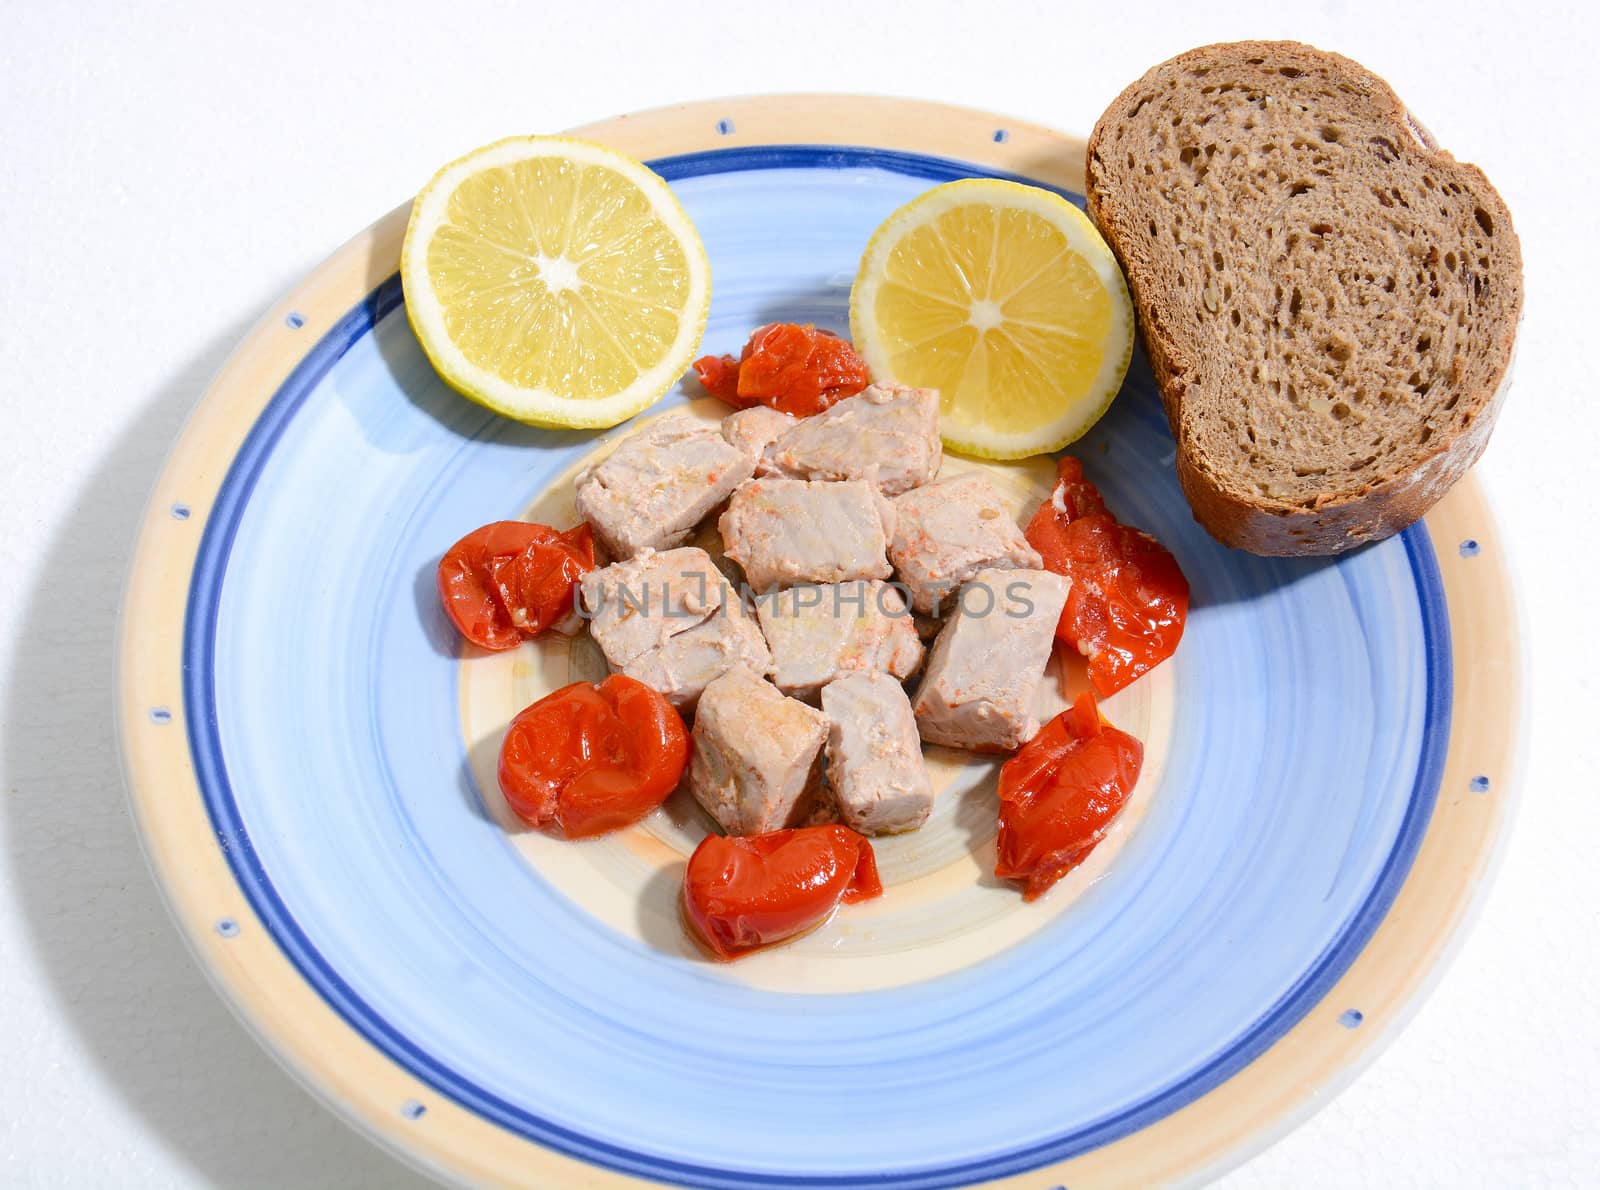 original italian recipe homemade food - tuna with cherry tomatoes